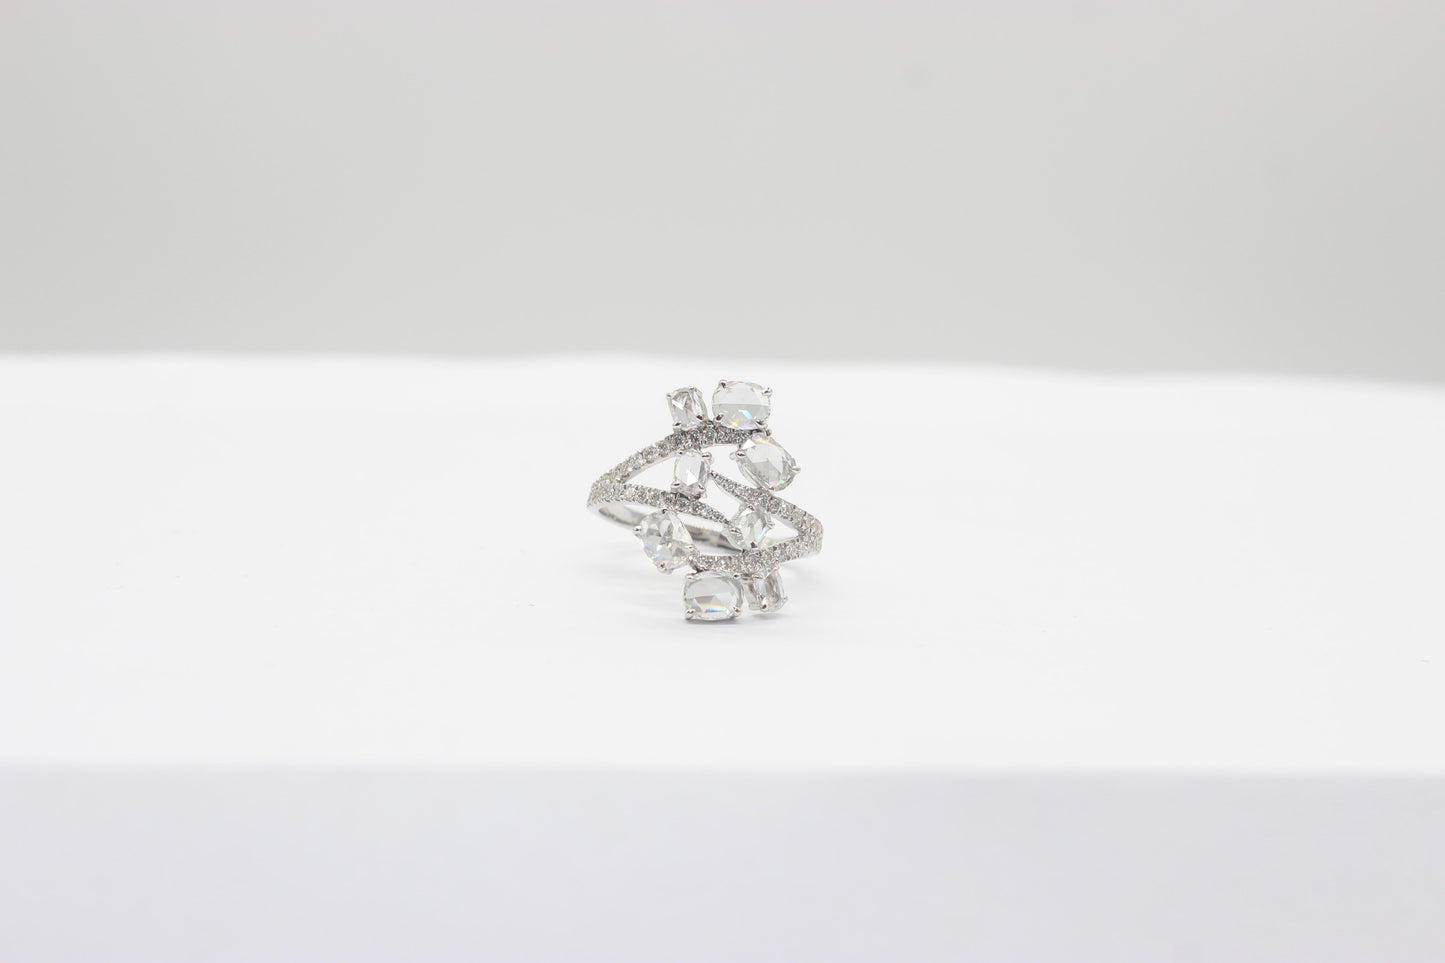 1.39 Carat Oval Diamond Rosecut Floral Ring, White Gold